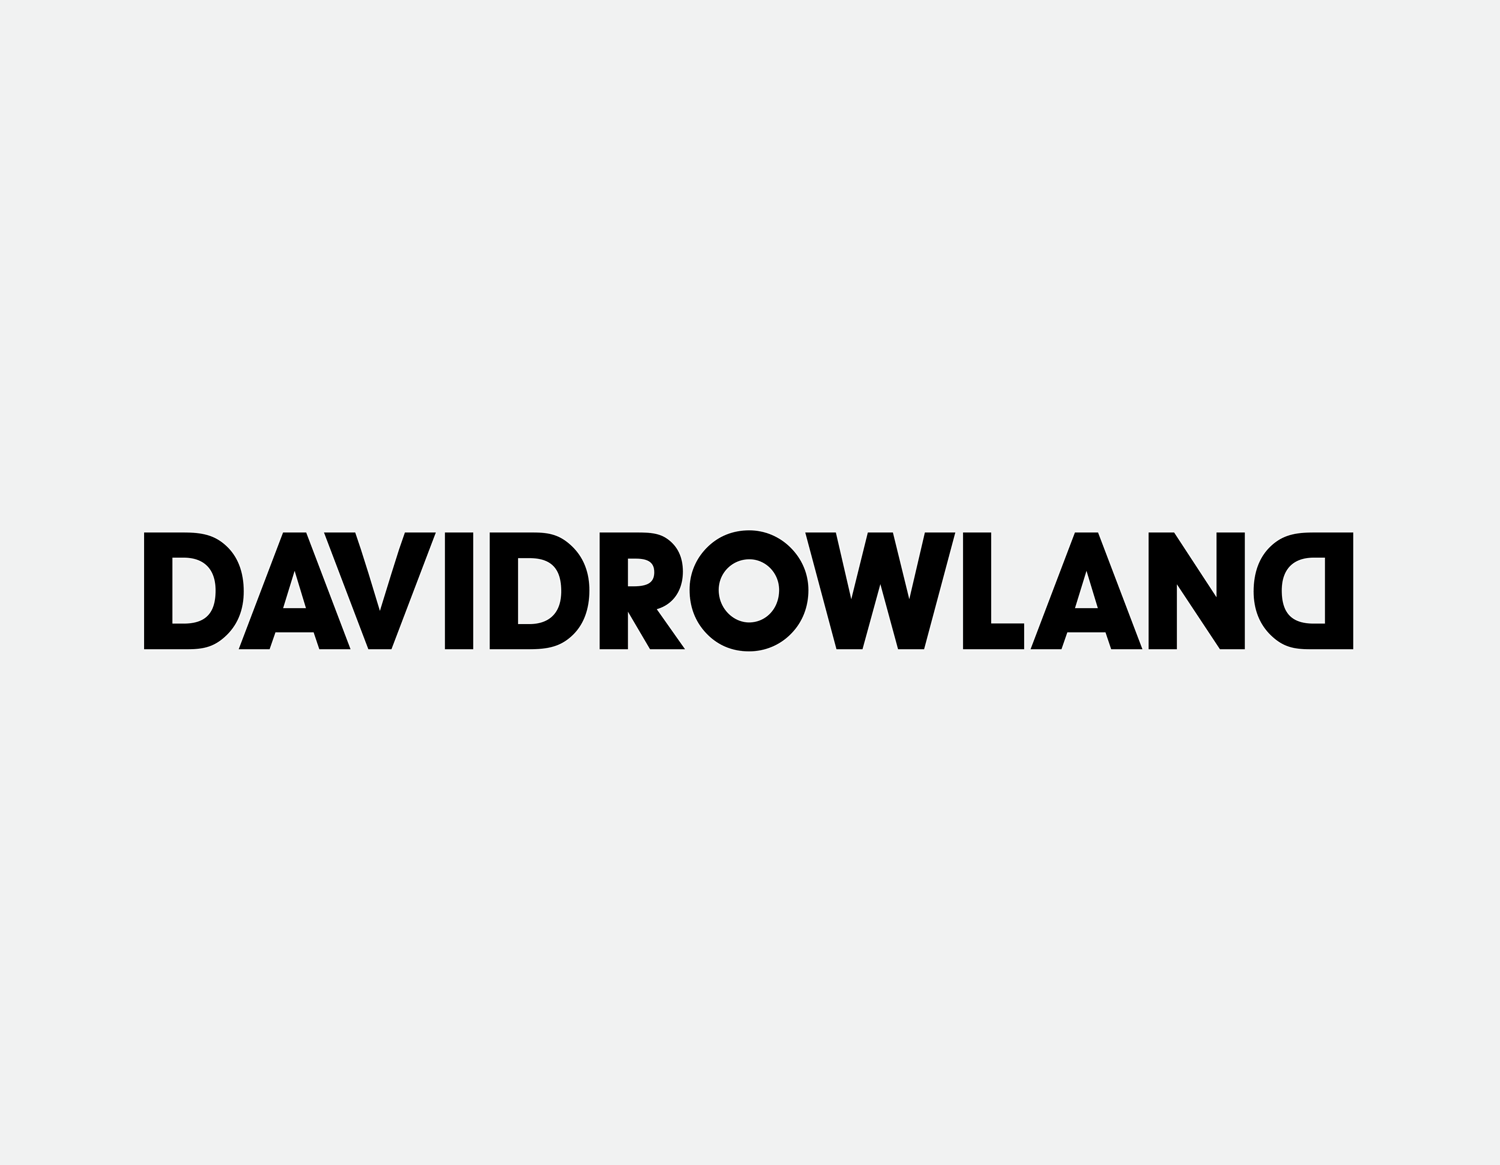 Logotype by London-based graphic design studio ico Design for photographer David Rowland